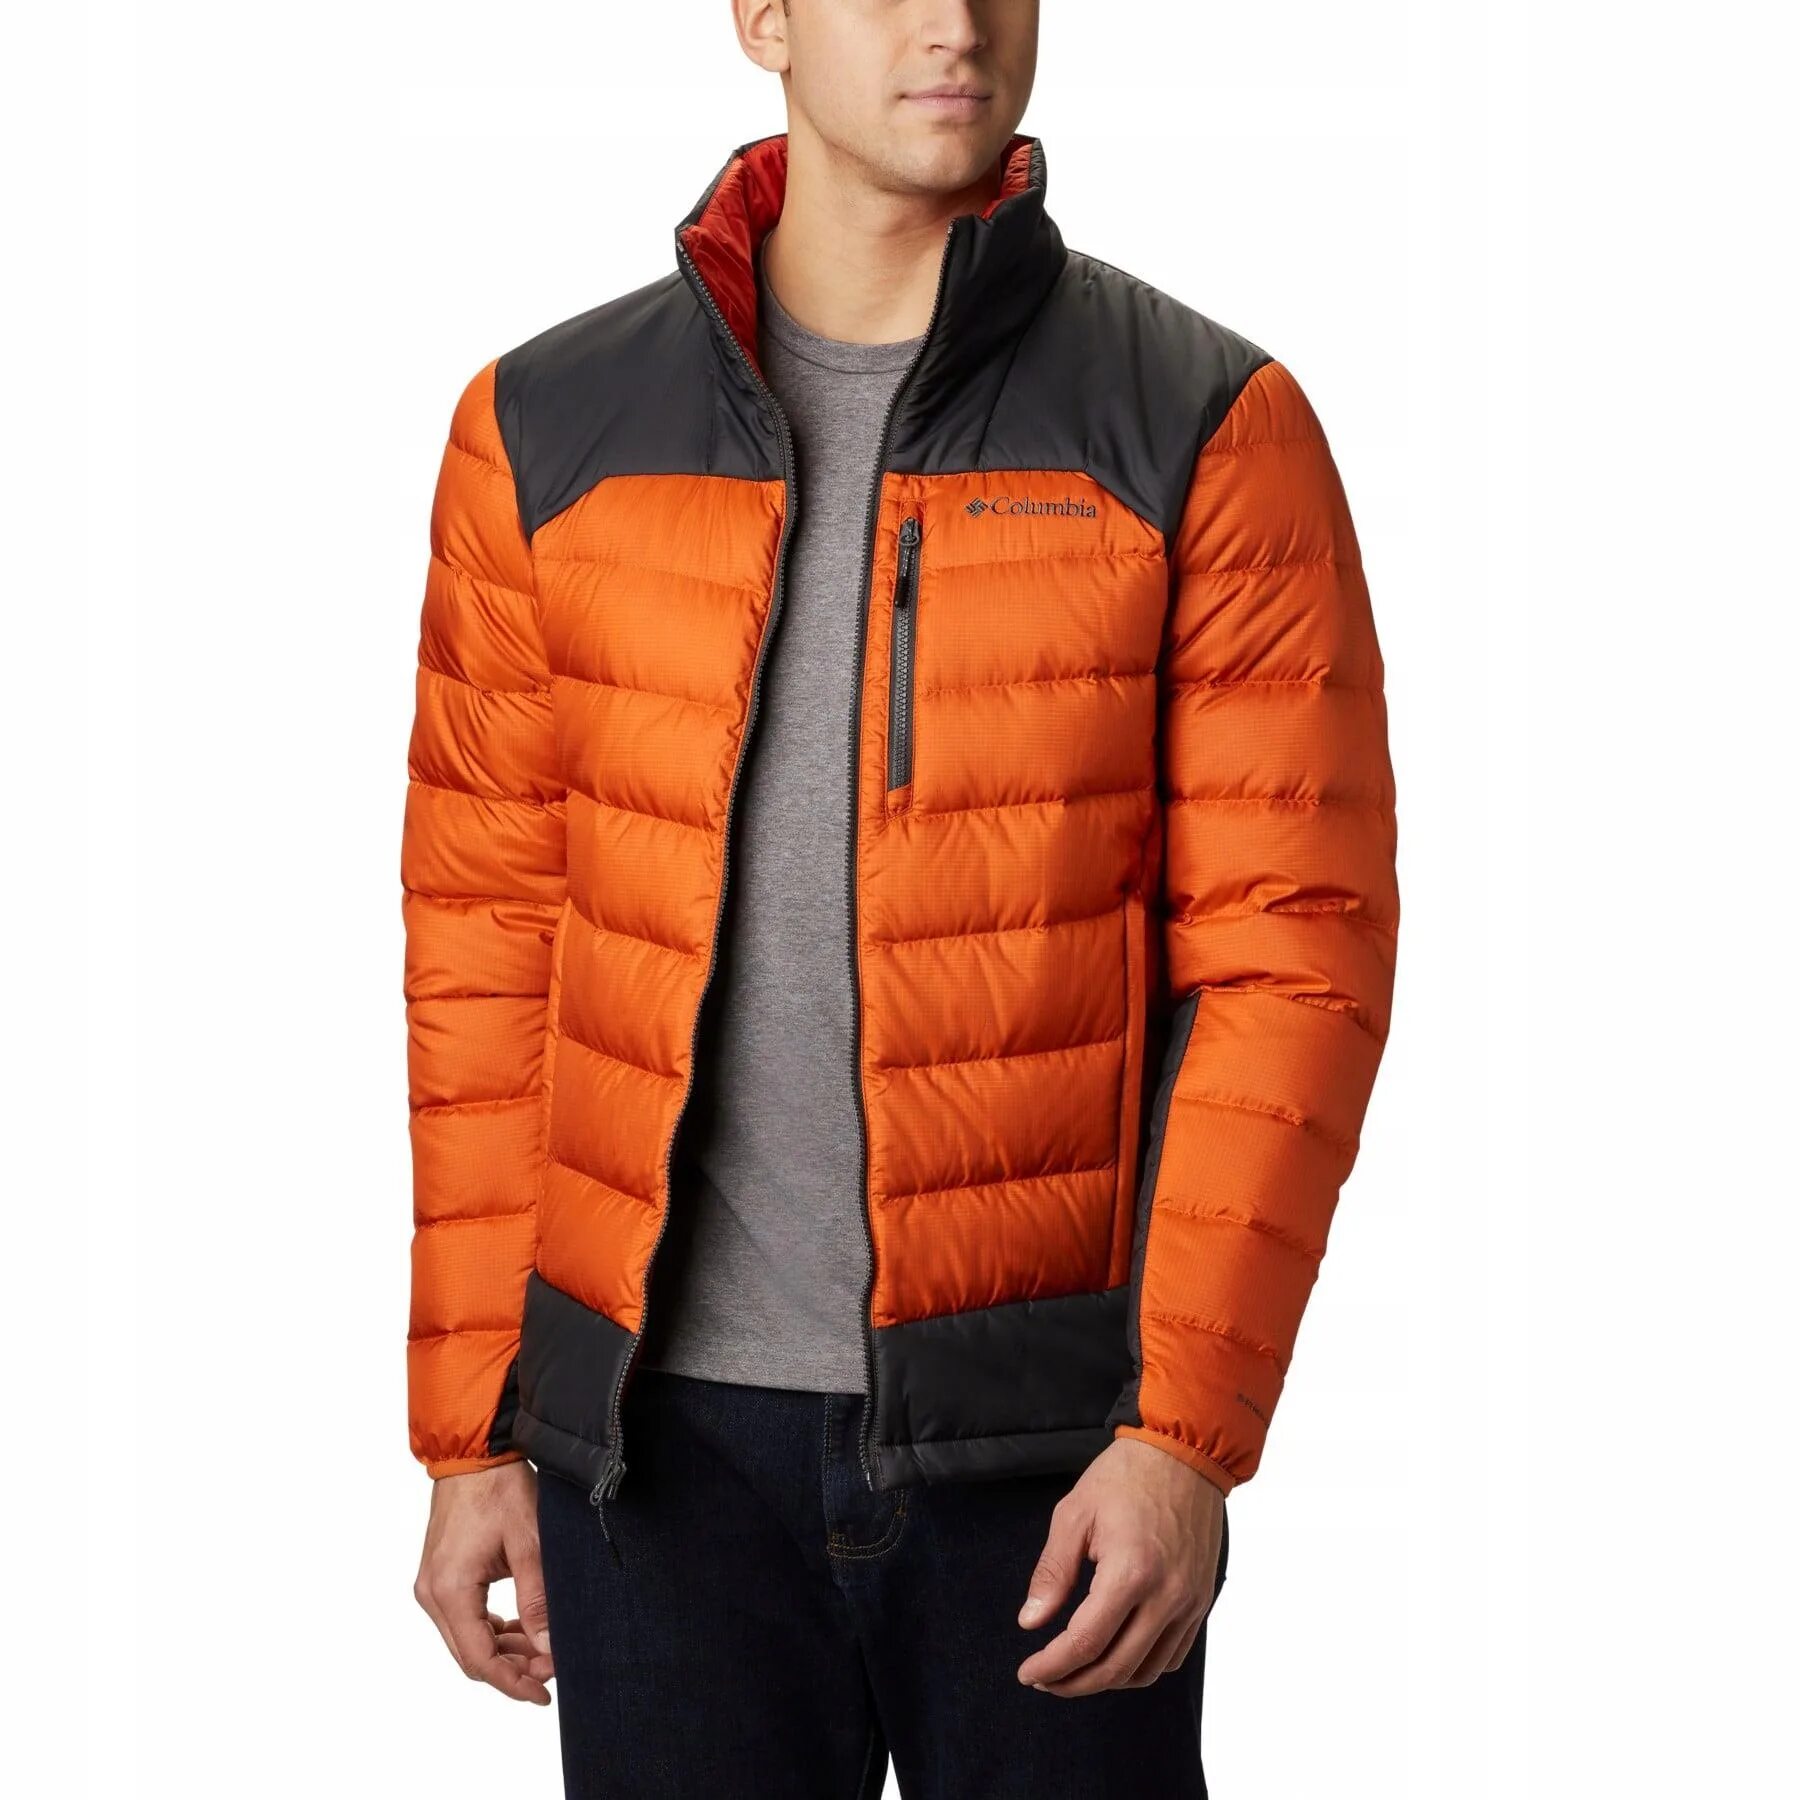 Куртка коламбия оранжевая мужская. Пуховик Columbia мужской оранжевый. Куртка Columbia оранжевая. Куртка Columbia мужская зимняя оранжевая.